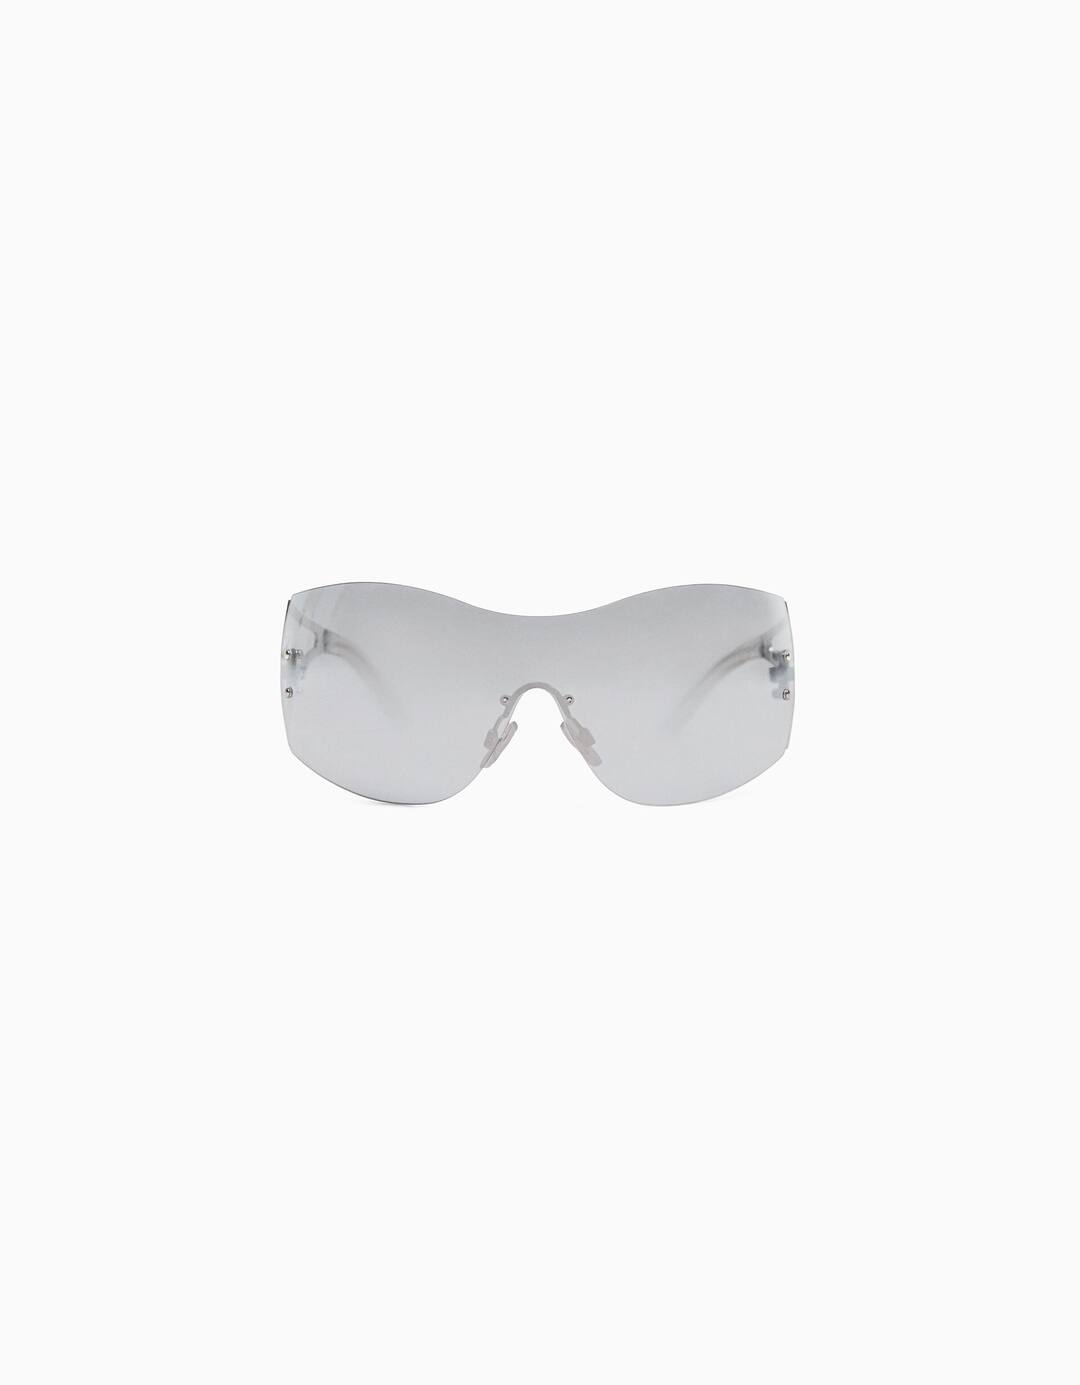 Mirrored lens sunglasses